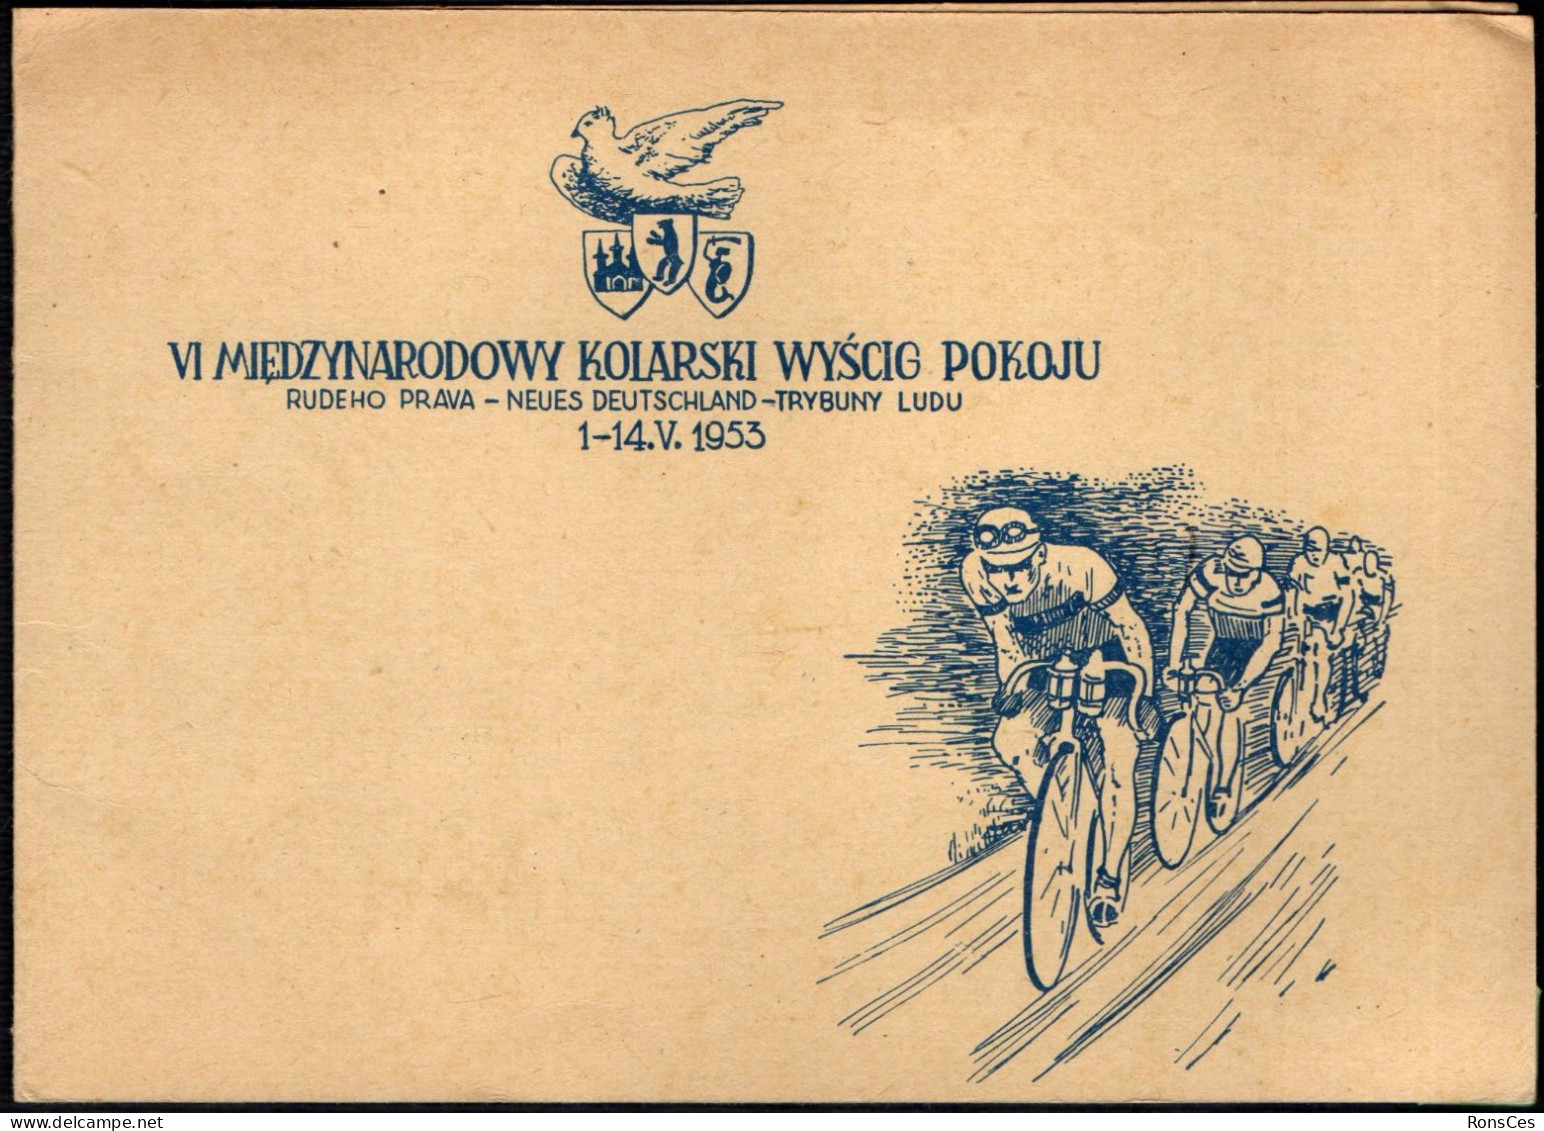 CYCLING - POLAND 1953 - THE INTERNATIONAL CYCLING RACE OF PEACE - SMALL FOLDER - A - Cyclisme